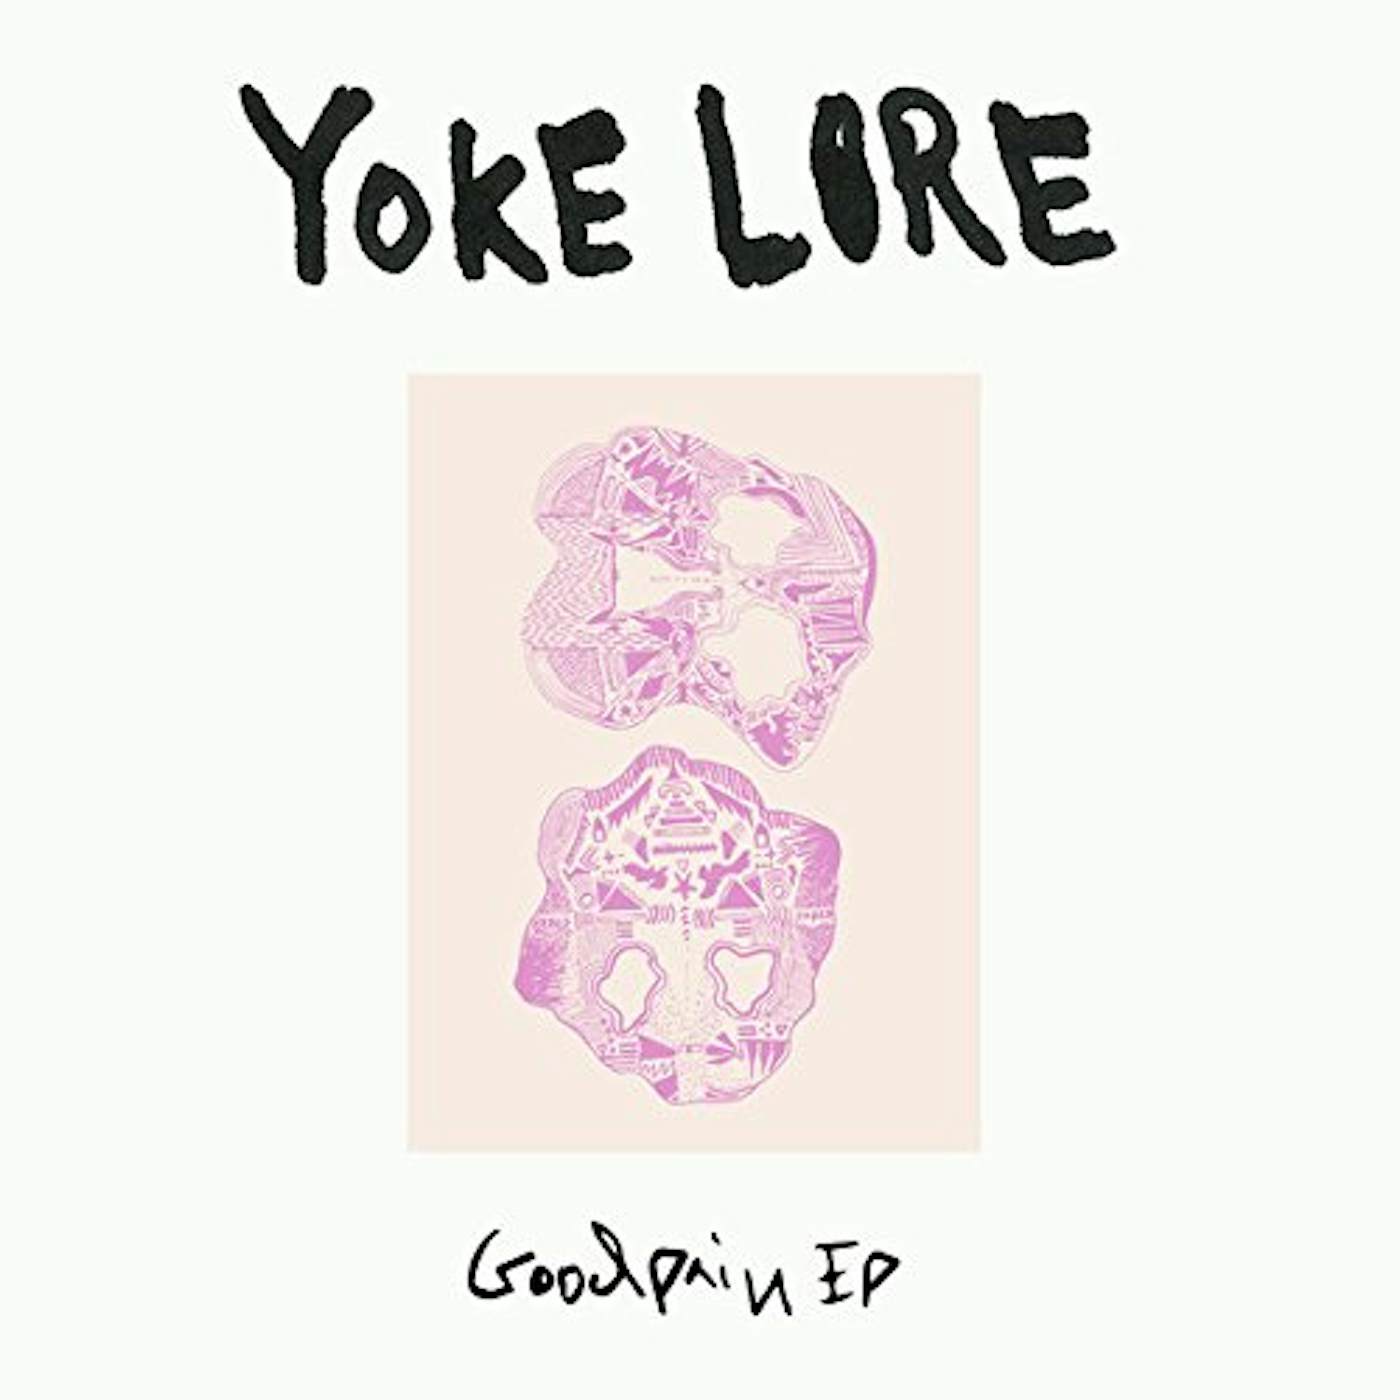 Yoke Lore GOODPAIN (BEIGE) Vinyl Record